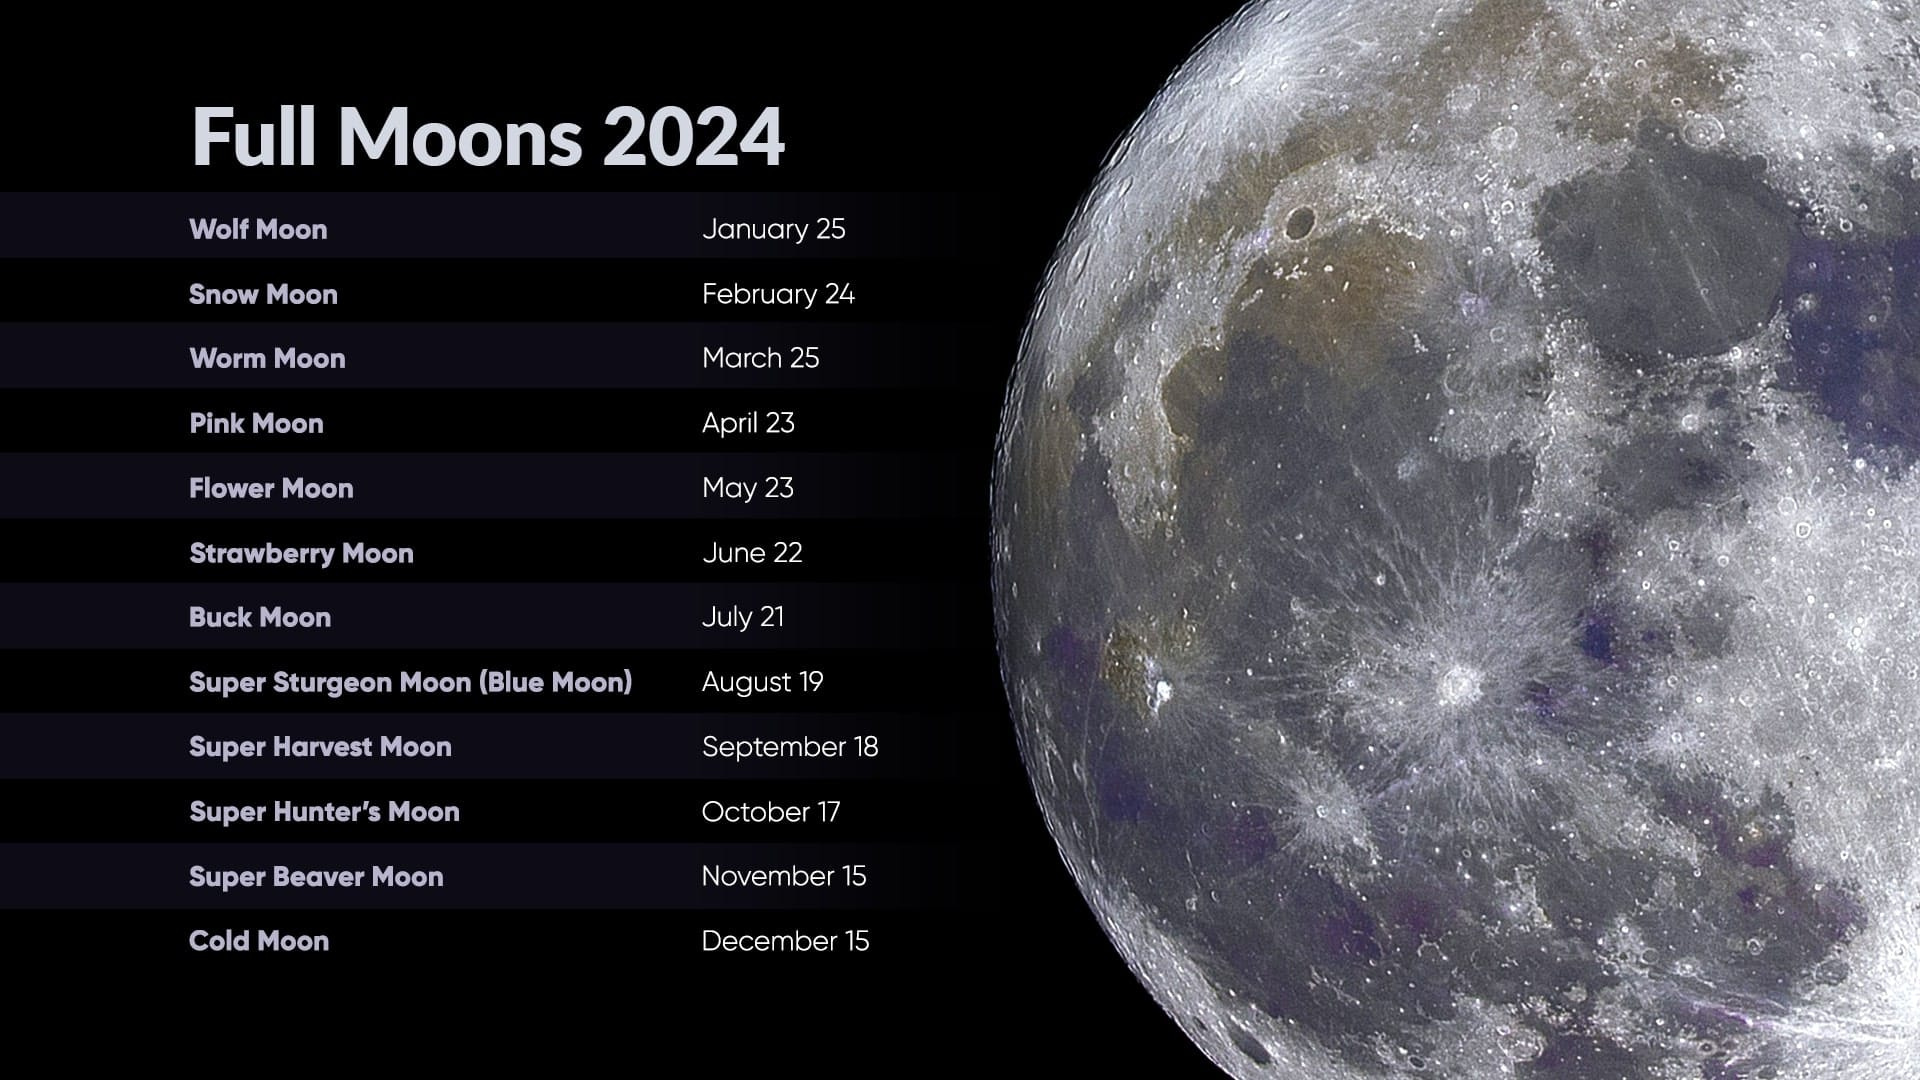 Next Full Moon | February Full Moon 2024 | Full Moon Schedule 2024 in July 21st Lunar Calendar 2024